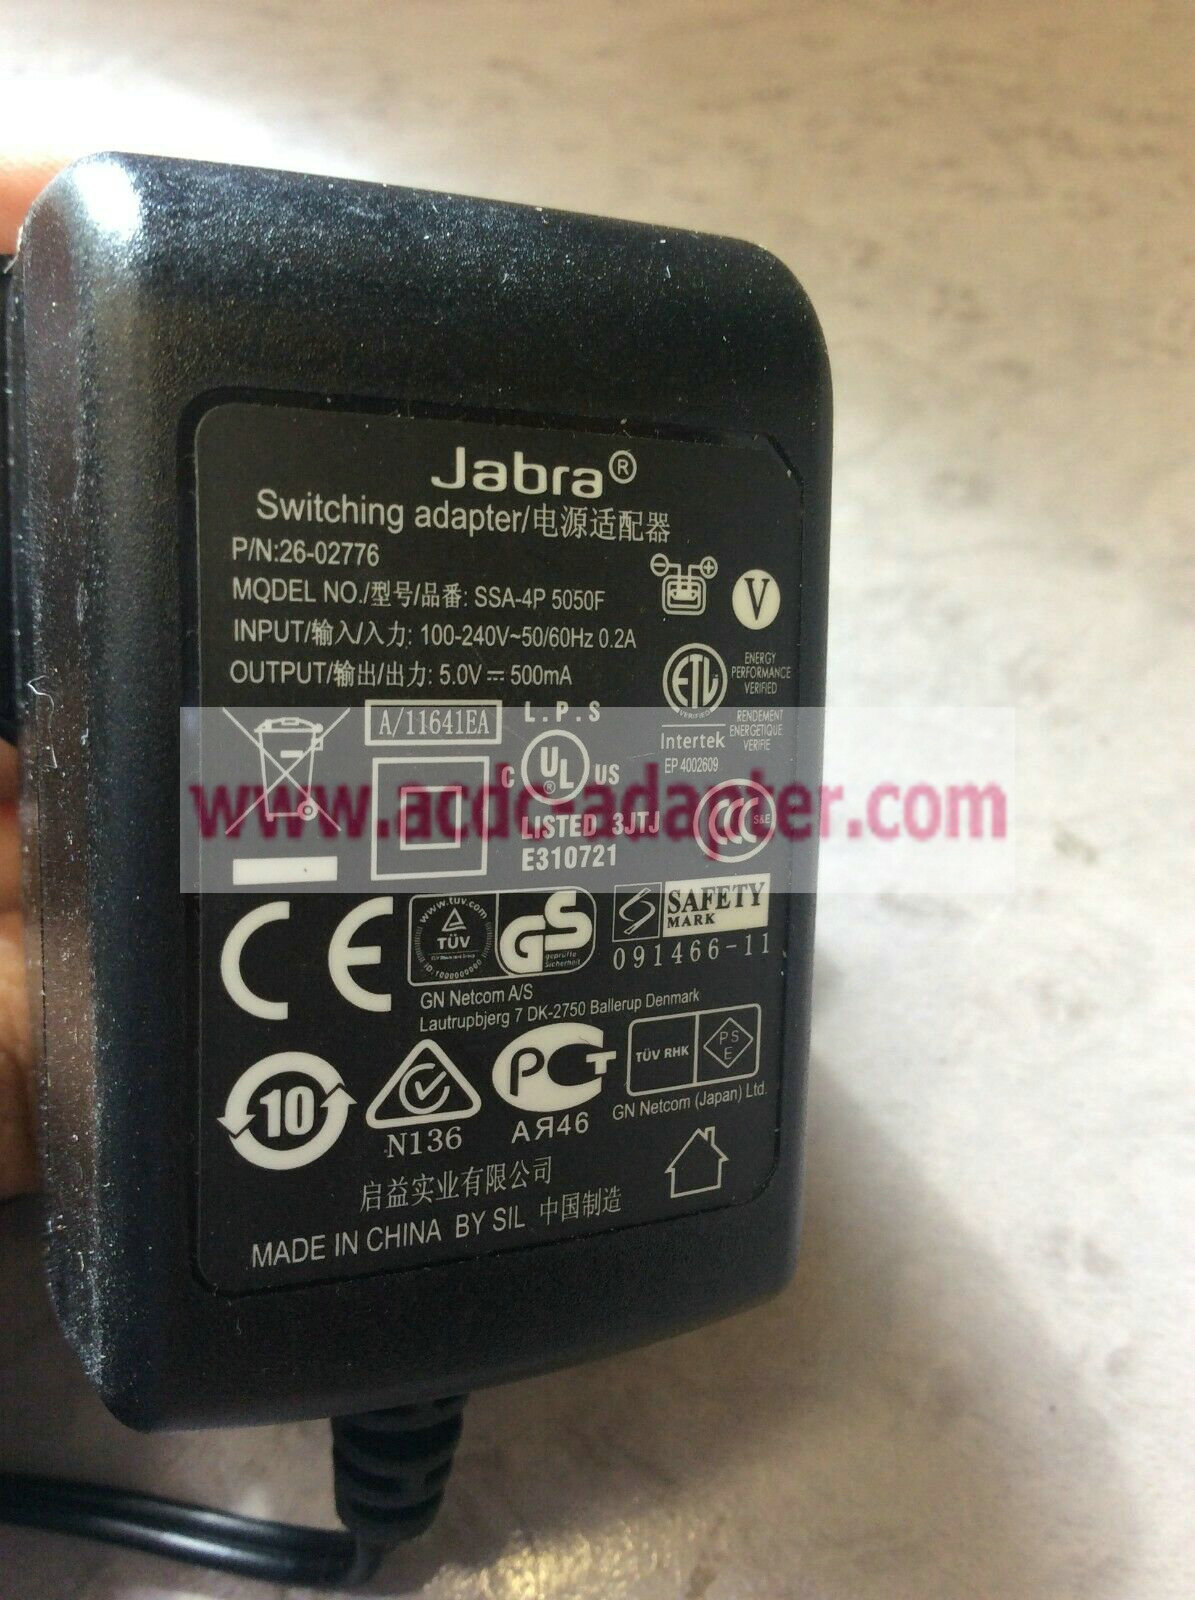 New Jabra SSA-4P 5050F 26-02776 Charger 5V 500mA ABR183 10648 Power Supply